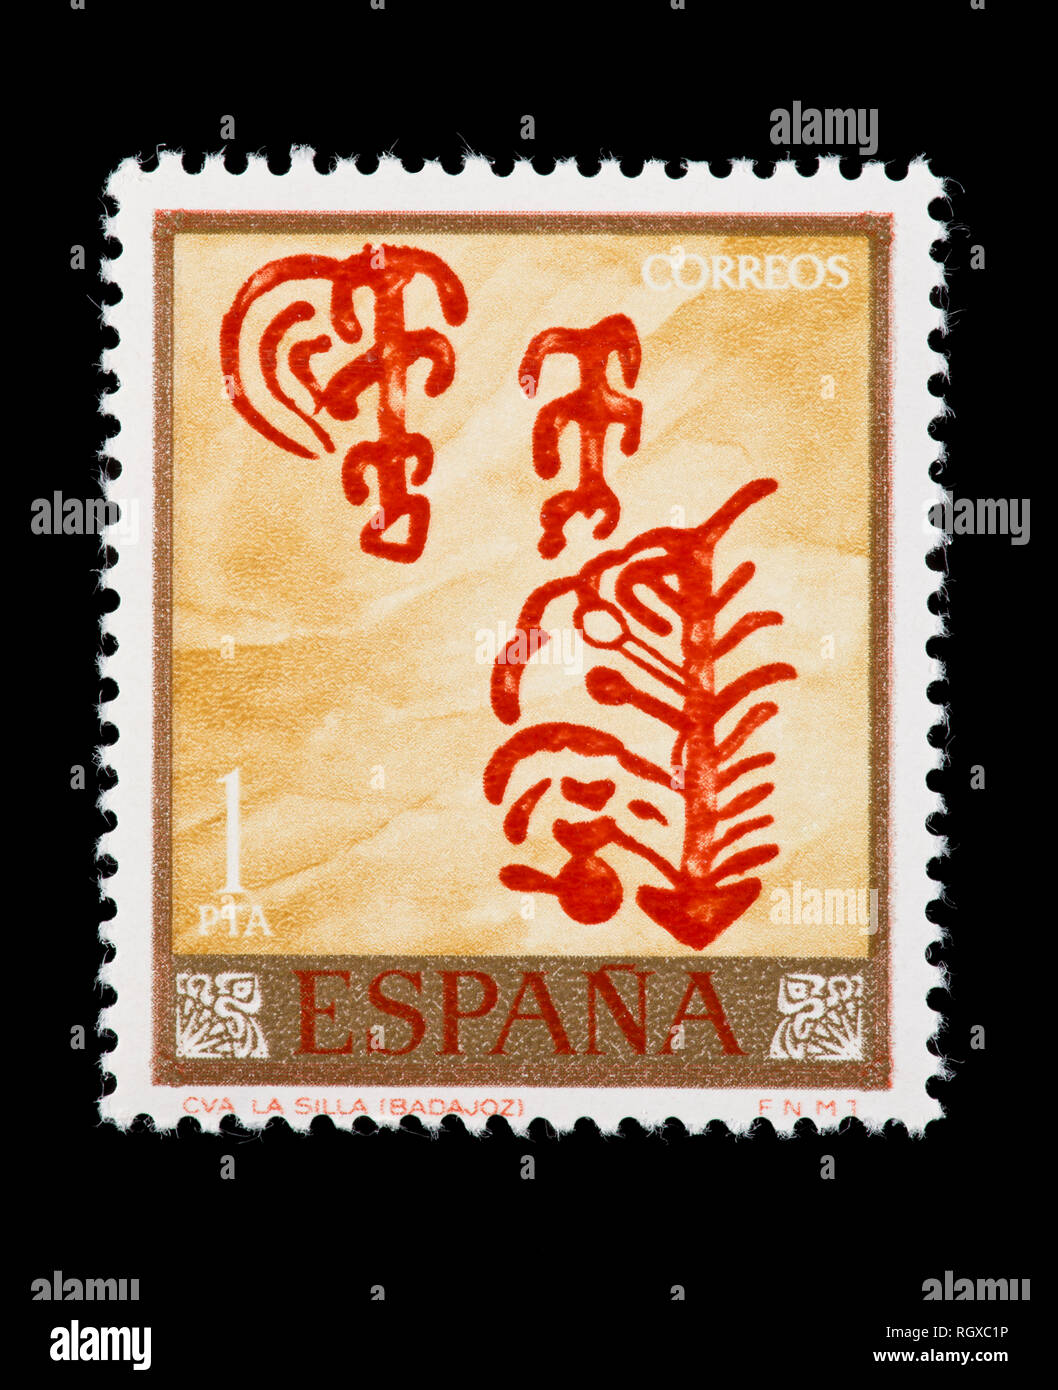 Timbre d'Espagne représentant un ornamentt l'art rupestre, de la pré-historique d'habitants. Banque D'Images